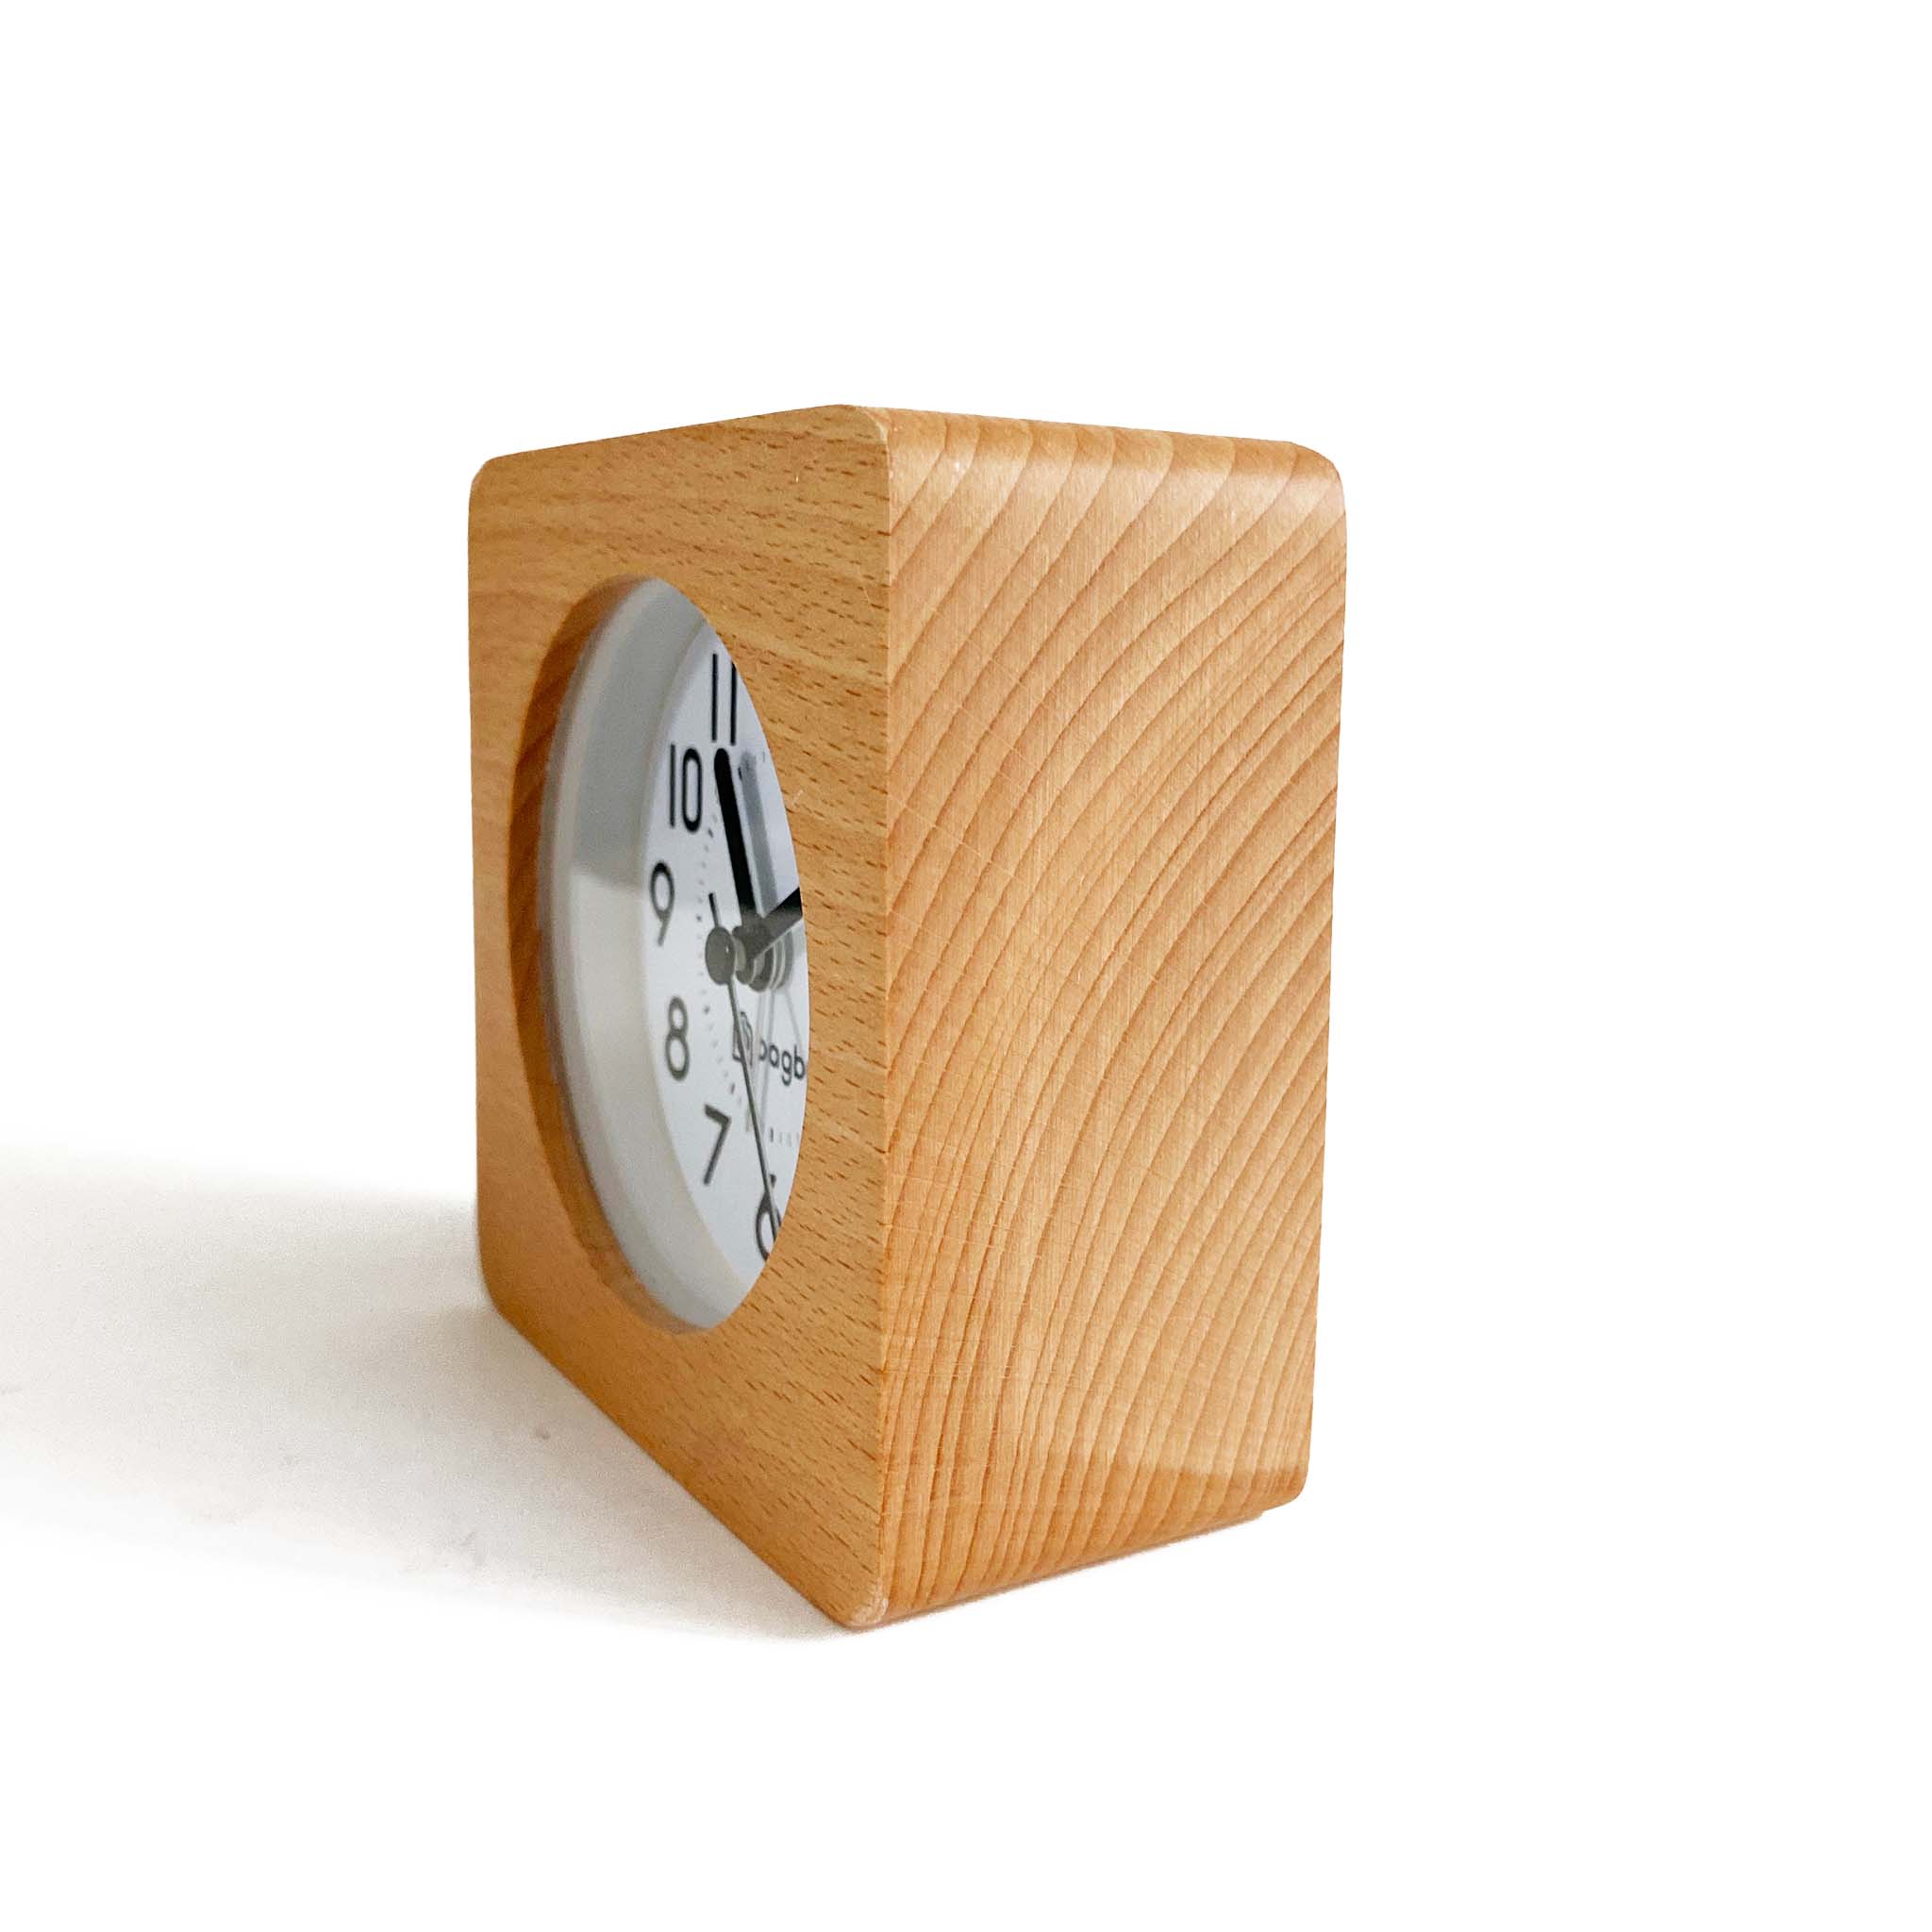 Vintage Retro Analog Alarm Clock, 4 inch Super Silent Non Ticking Small...  | eBay